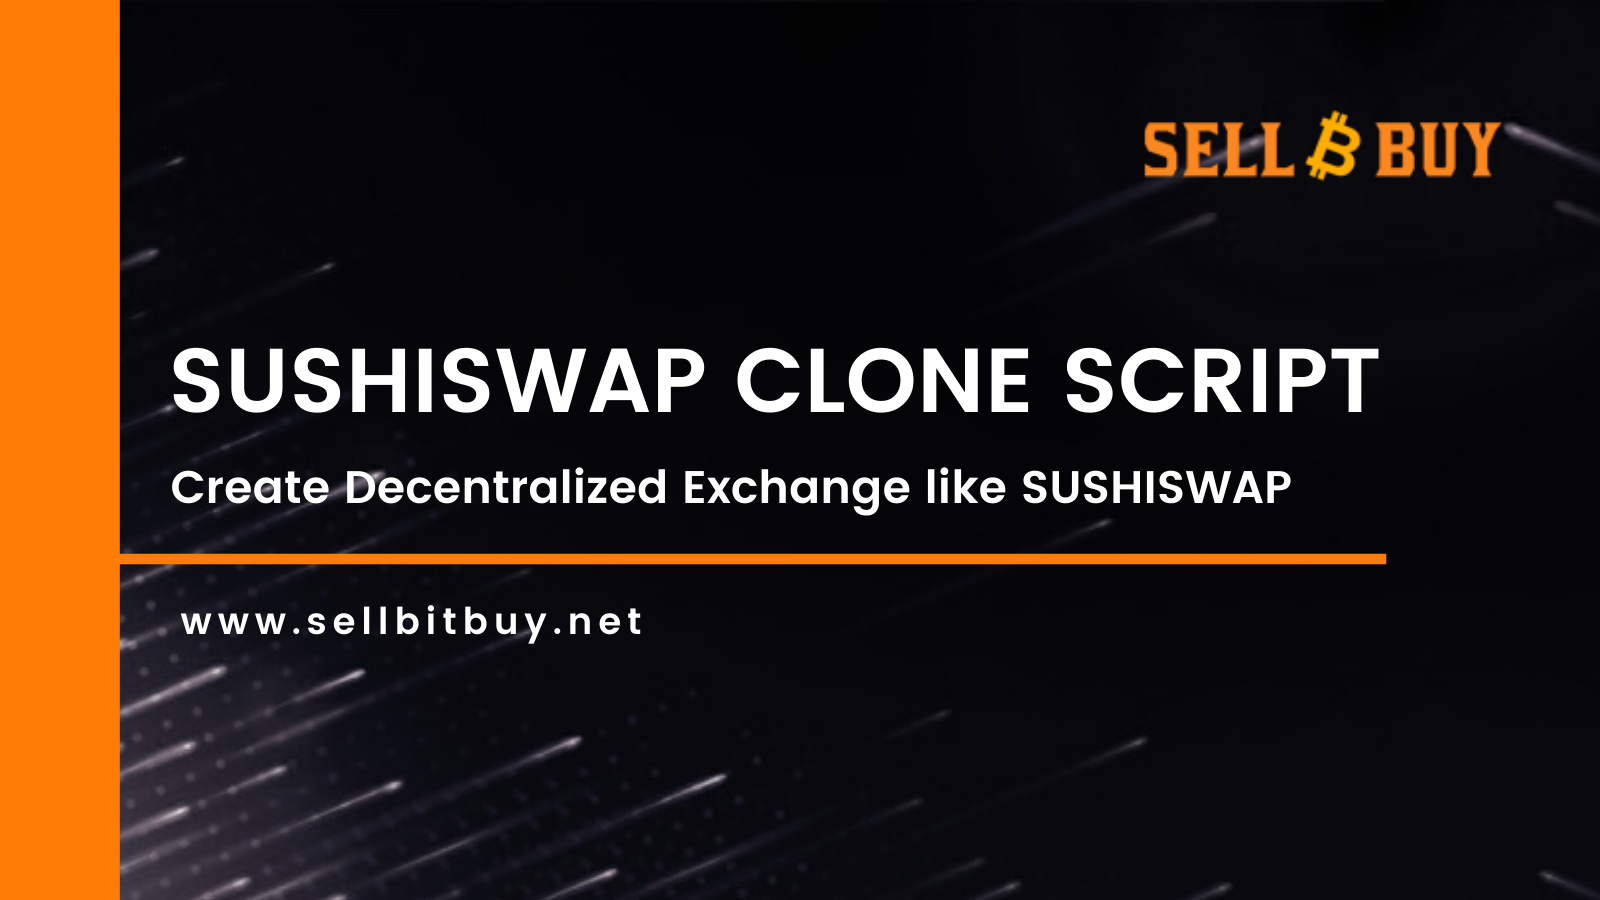 Sushiswap Clone Script - To Start An Ethereum Based DEX Platform Like Sushiswap